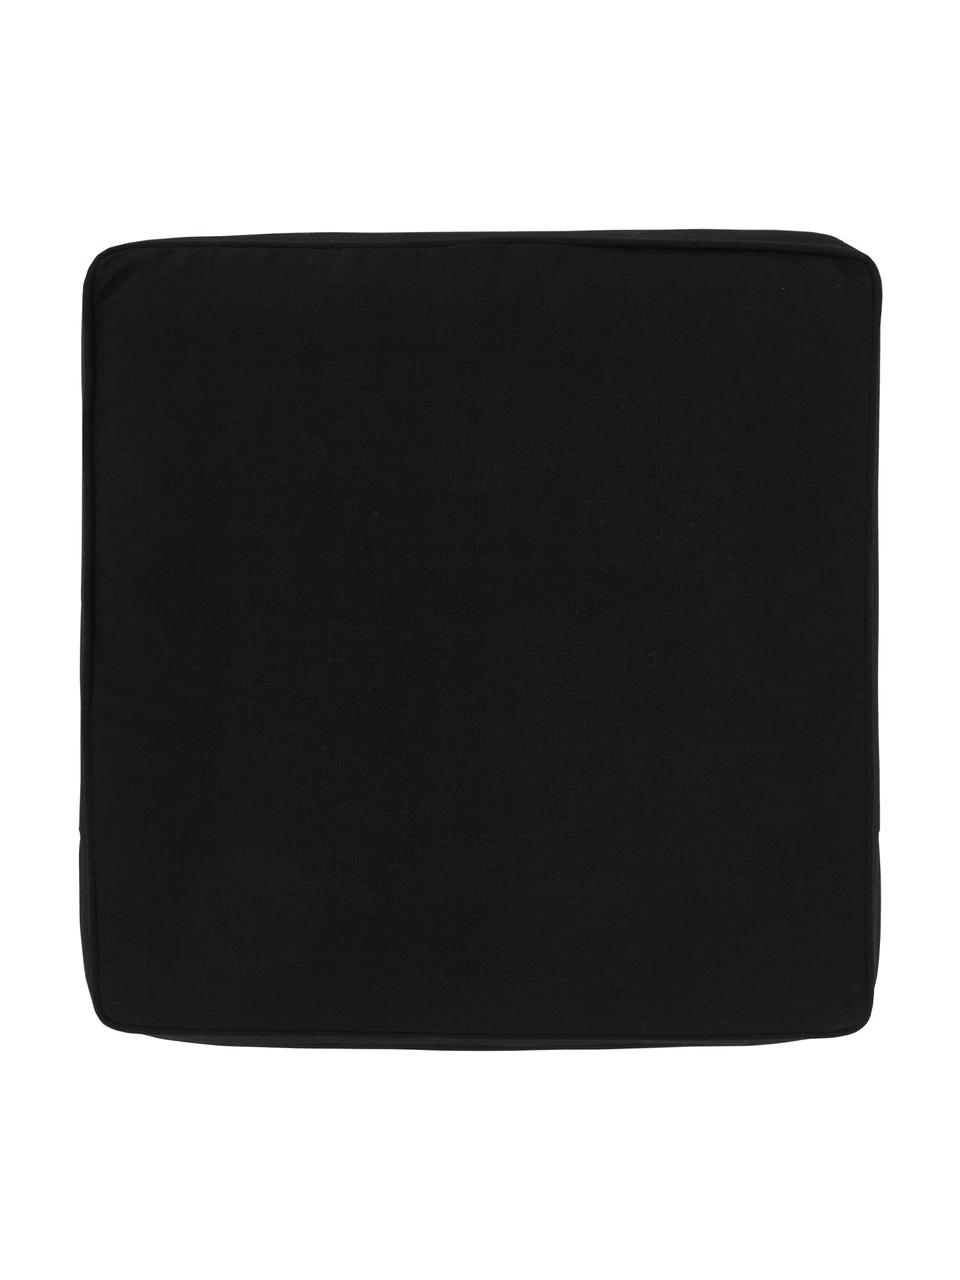 Cojín de asiento alto de algodón Zoey, Funda: 100% algodón, Negro, An 40 x L 40 cm